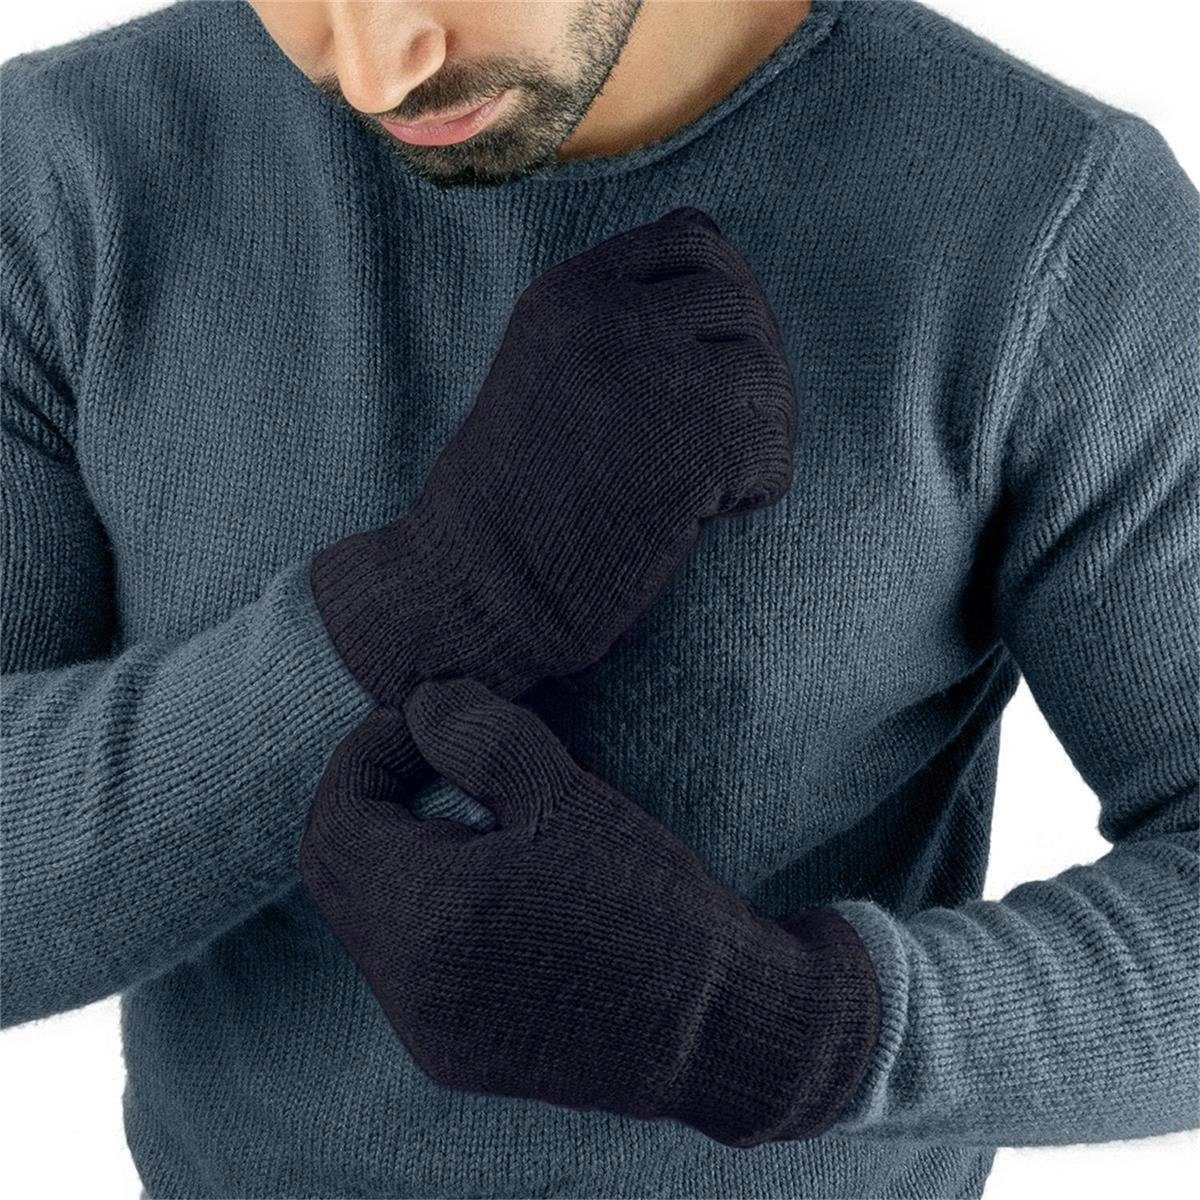 Strickhandschuhe 3M Navy Thinsulate Unisex Tarjane Handschuhe